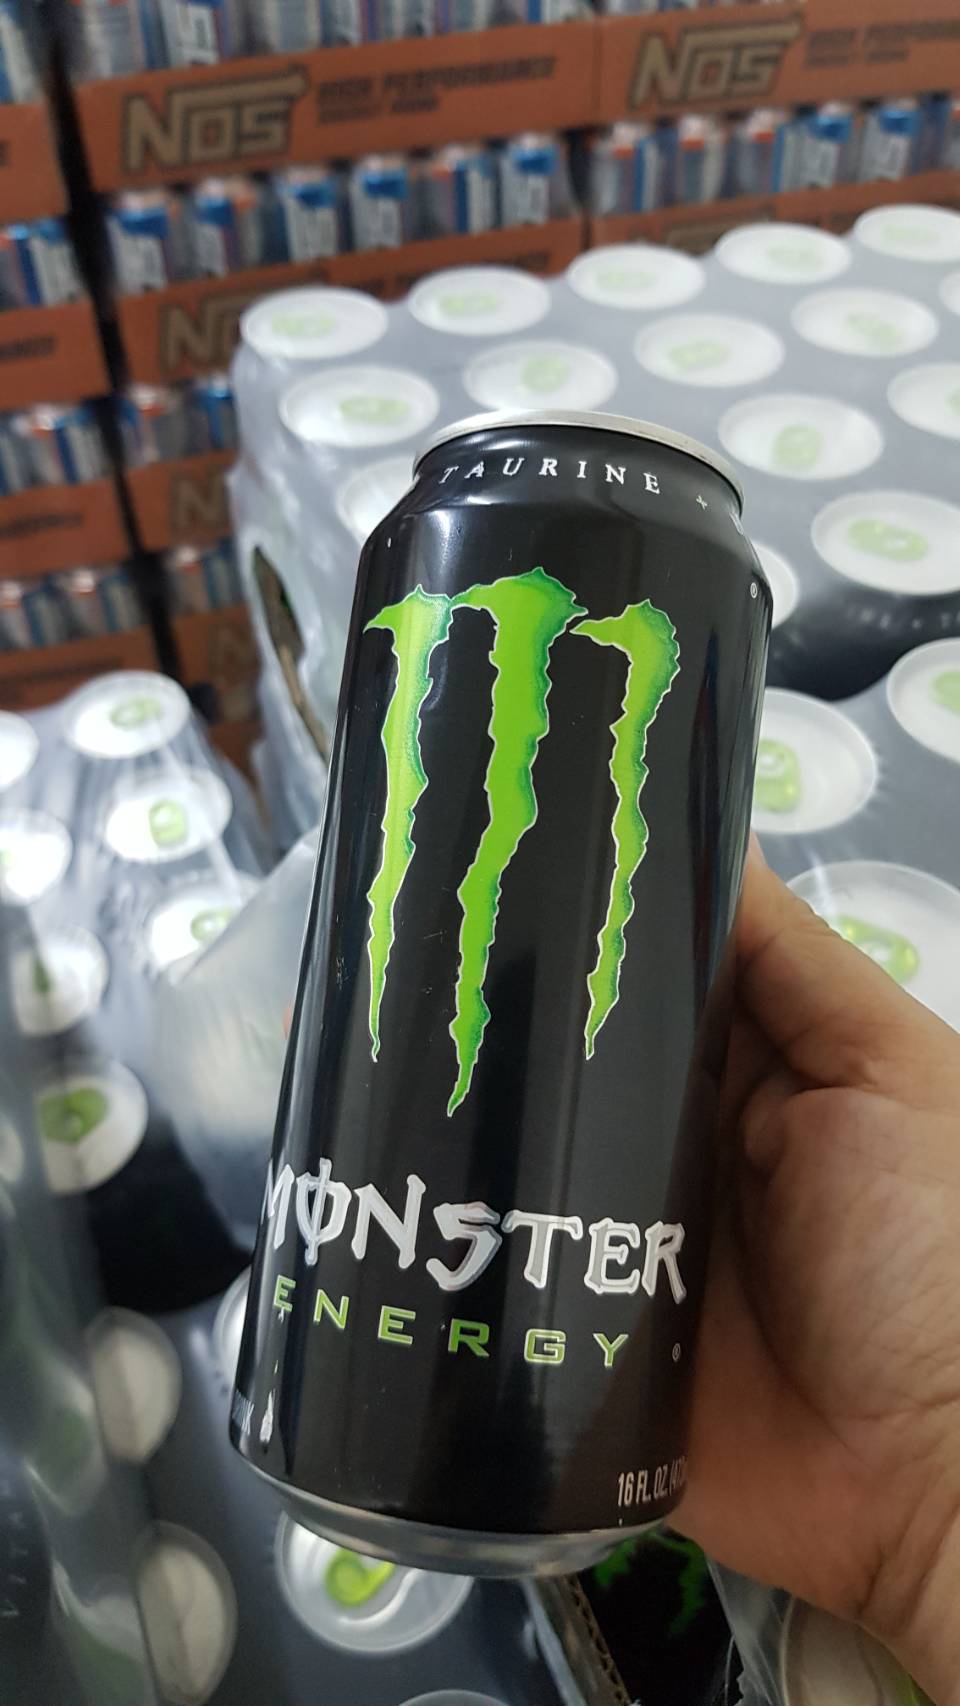 ??* Monster Energy Drink, Green, Original, 16fl oz. (473ml.) *เครื่องดื่มนำเข้าจาก USA*??